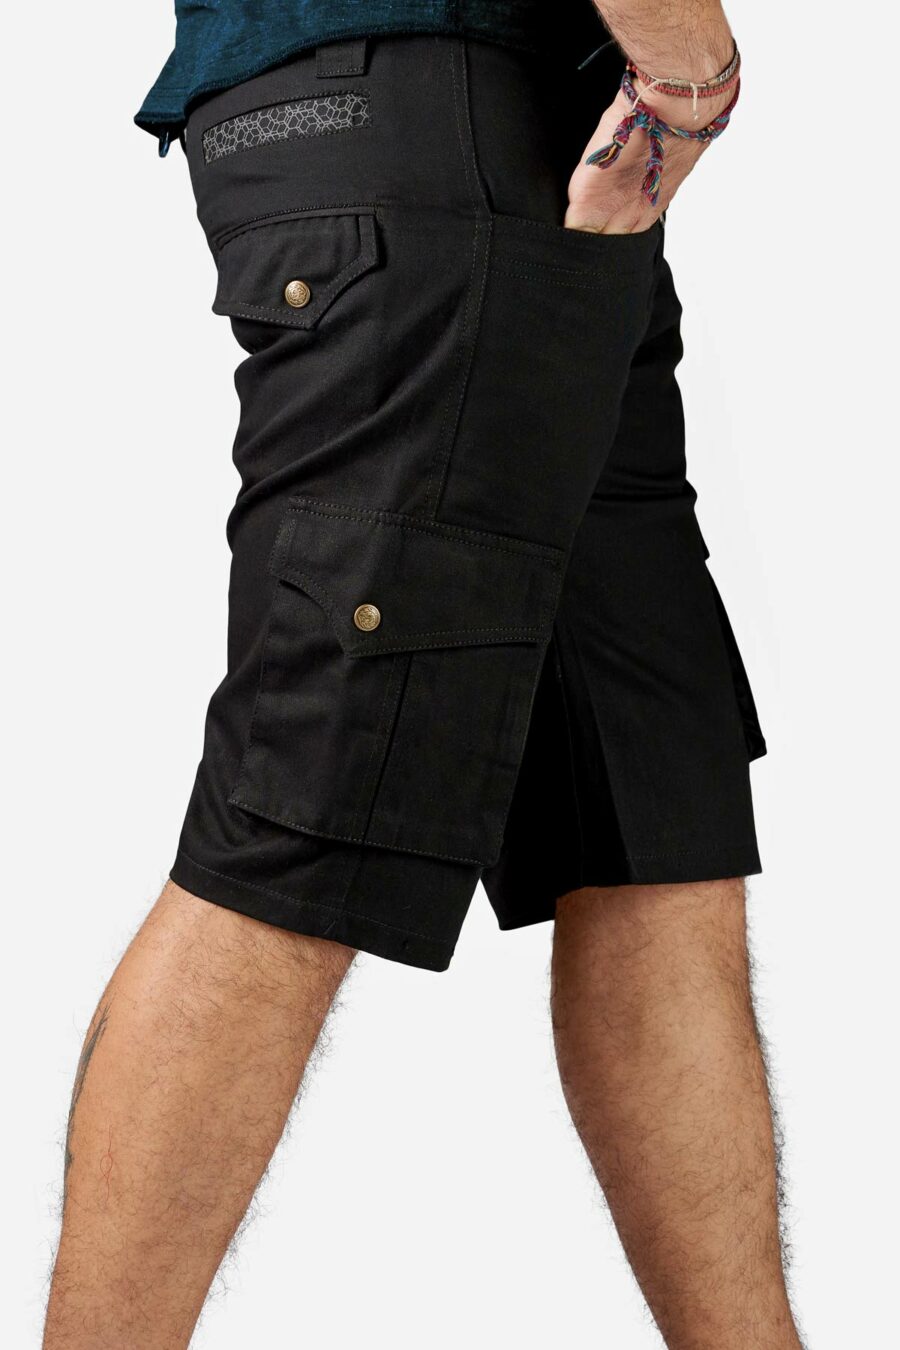 akio-streetwear-baggy-pants-black-for-men-with-screen-print-secret-pocket-adjustable-waistband-alternative-fashion-festival-wear-avanyah-clothing-sale